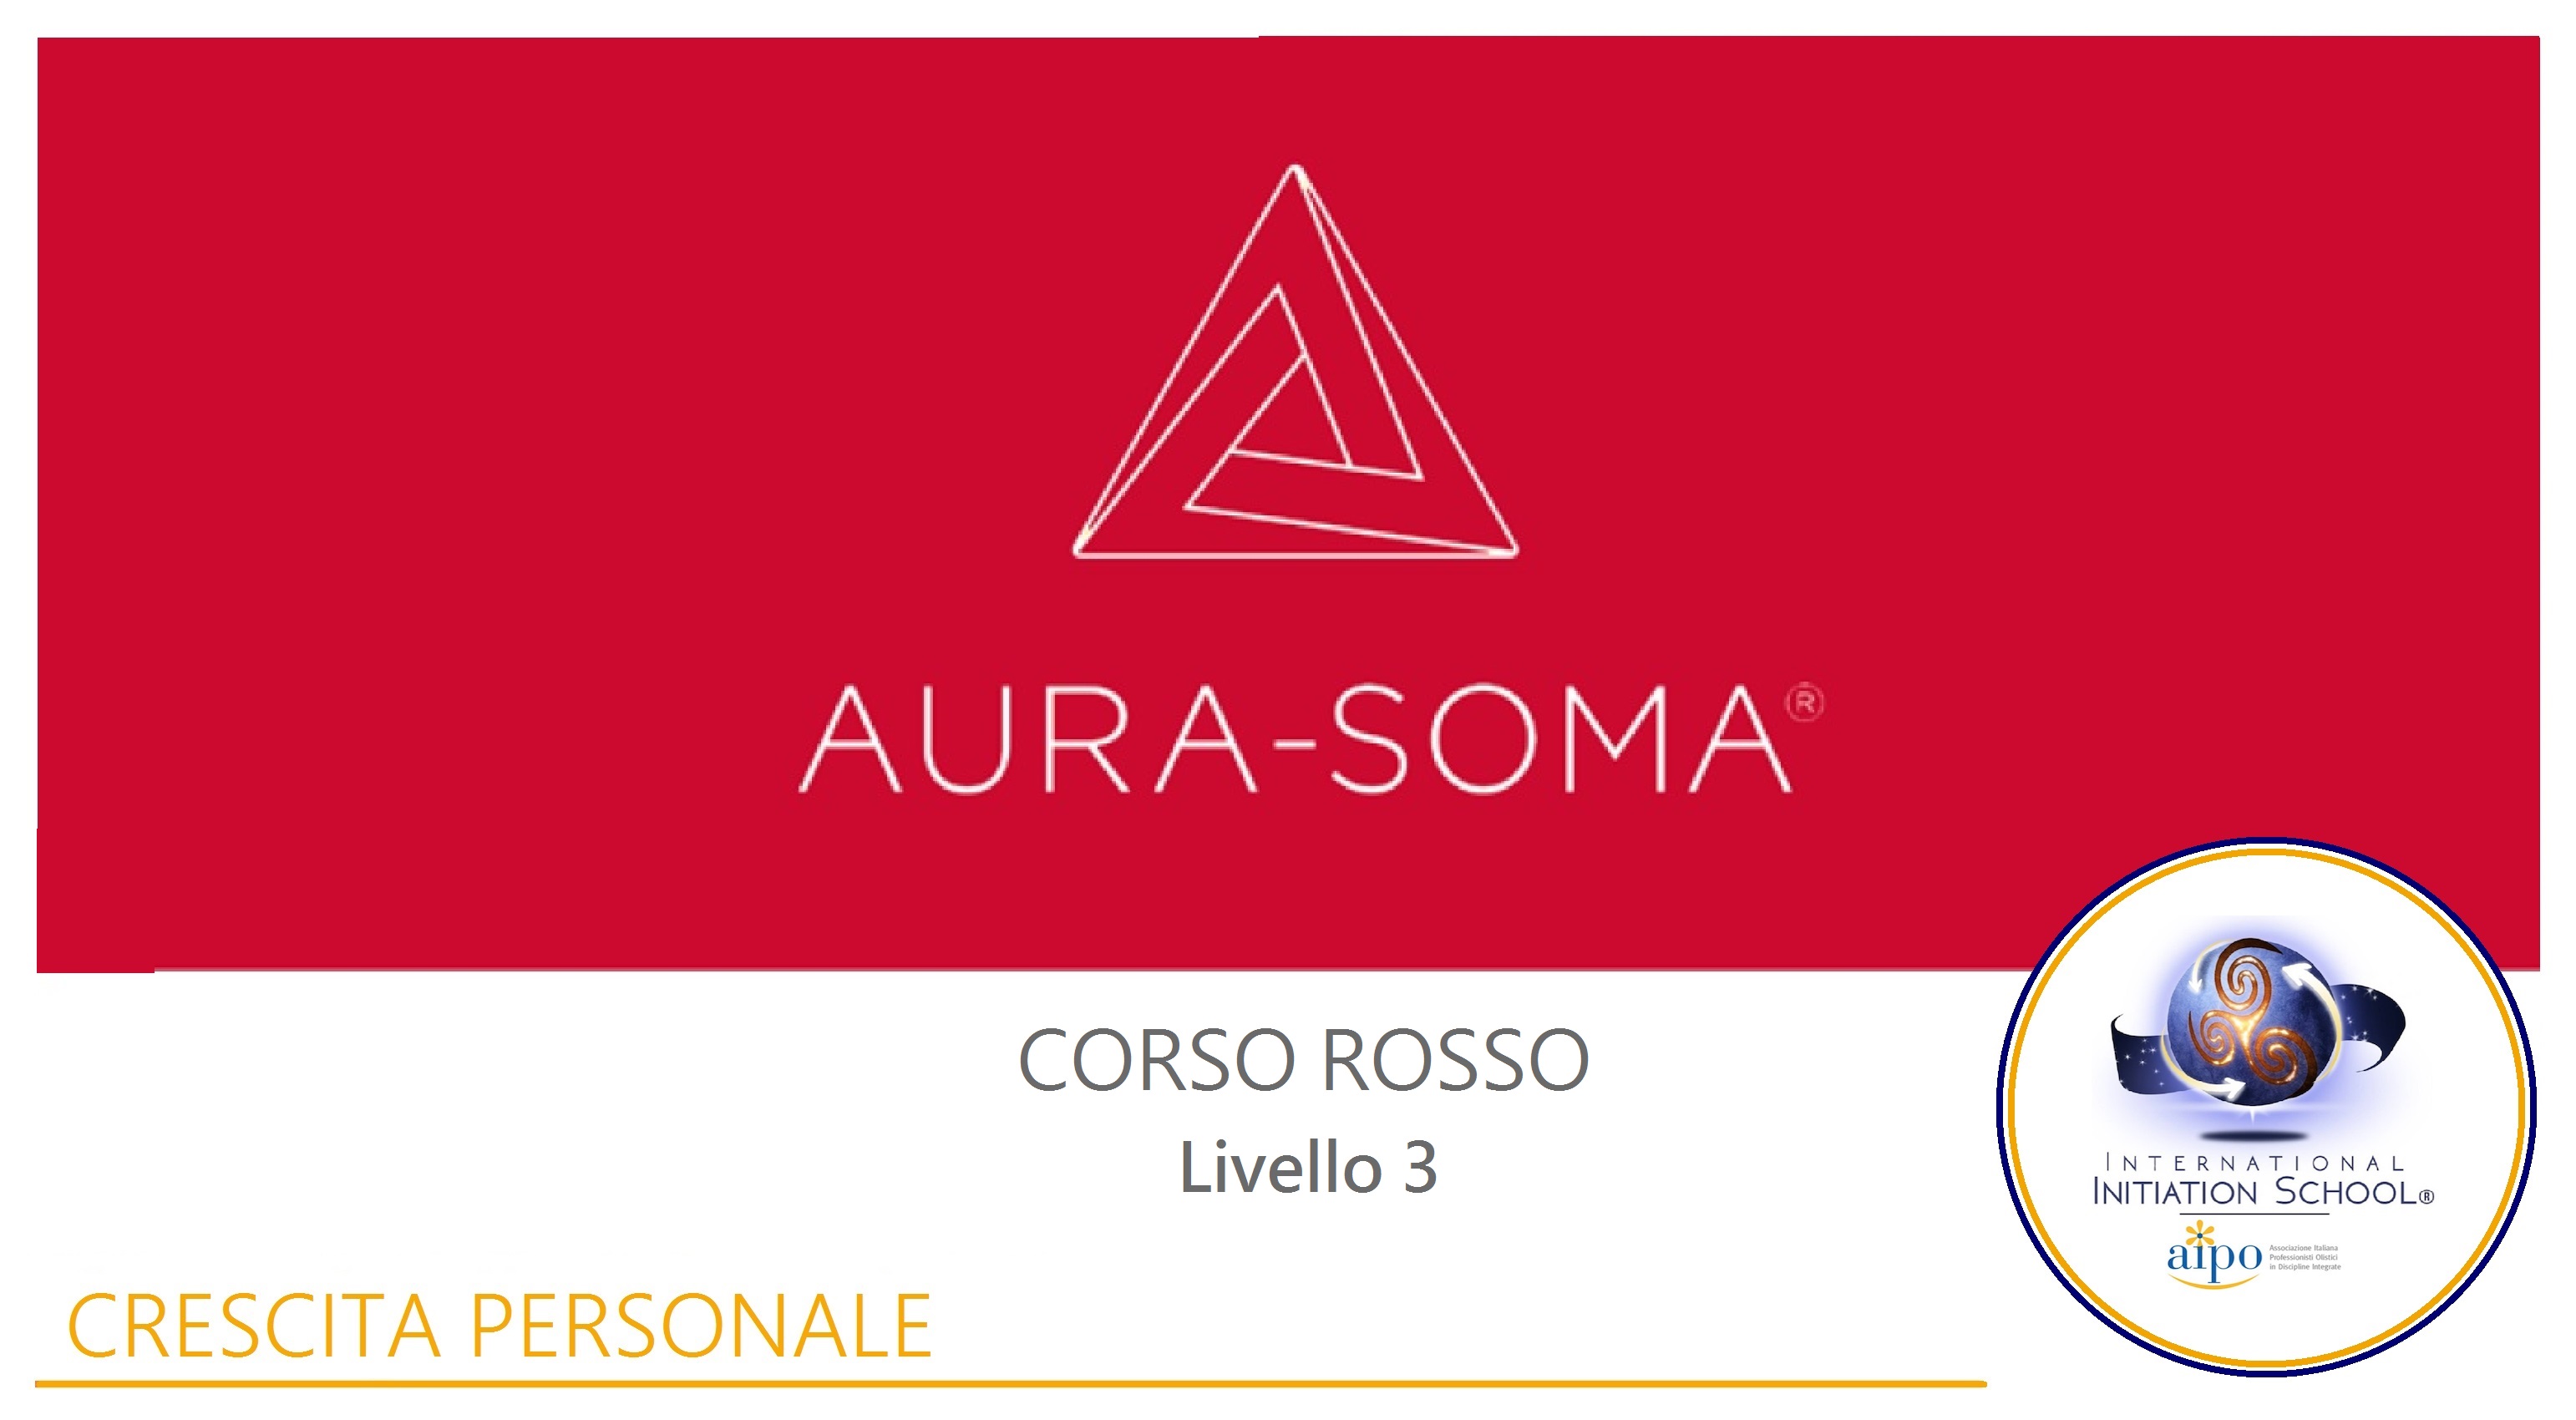 Aura-Soma® Livello 3: "Corso Rosso"